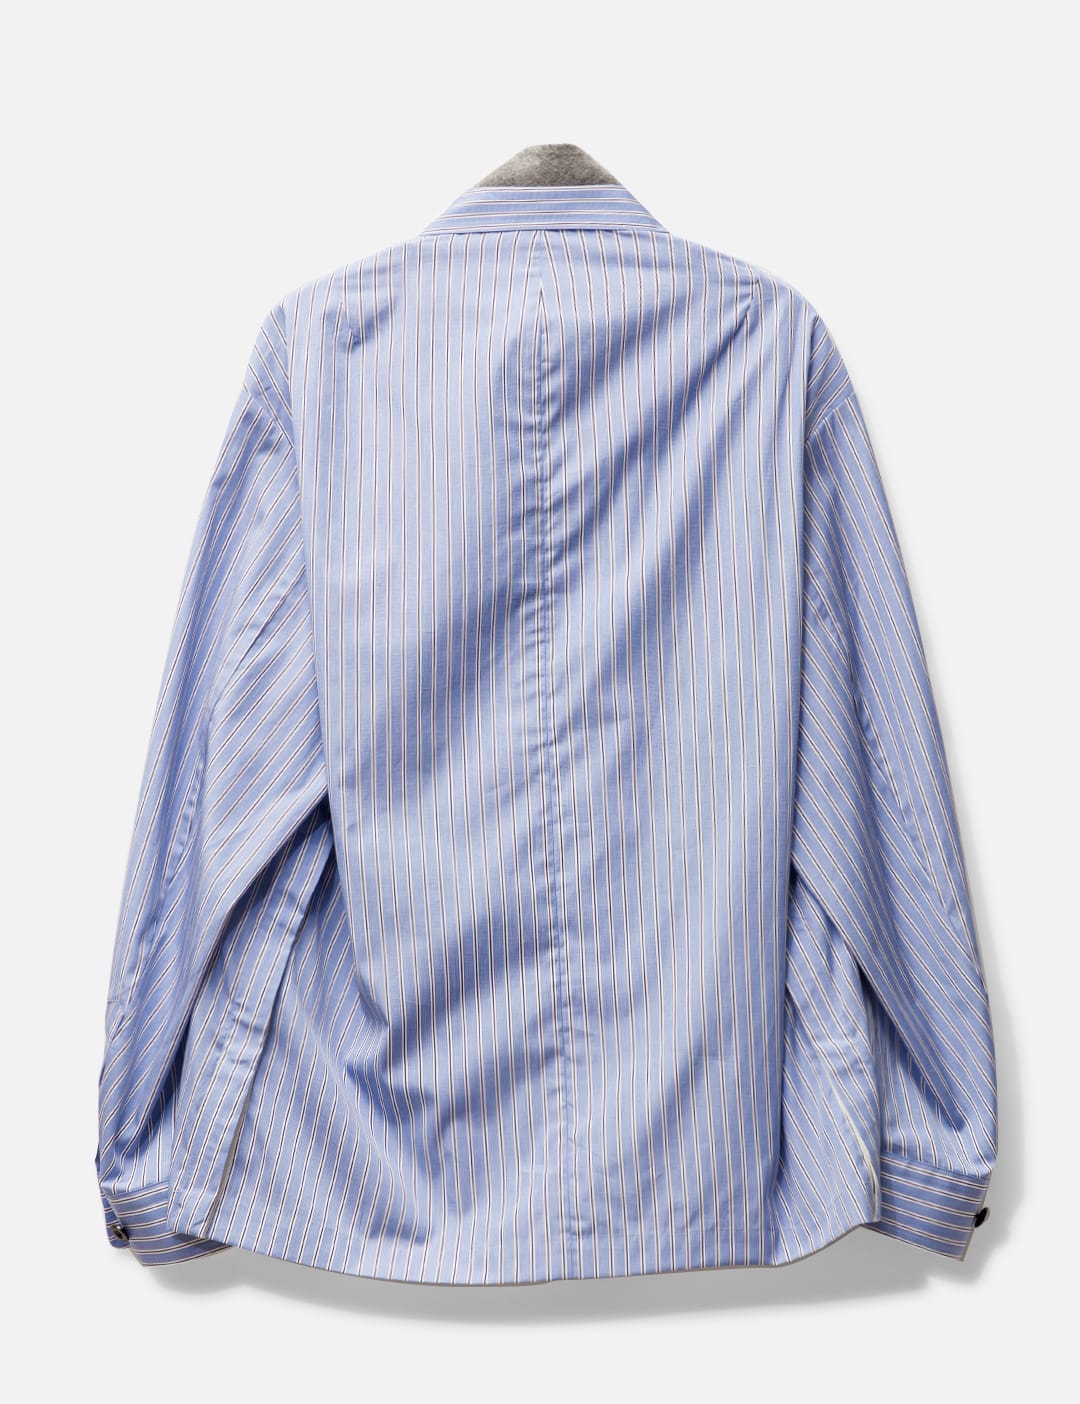 Sacai - Thomas Mason Cotton Poplin Jacket | HBX - Globally Curated ...